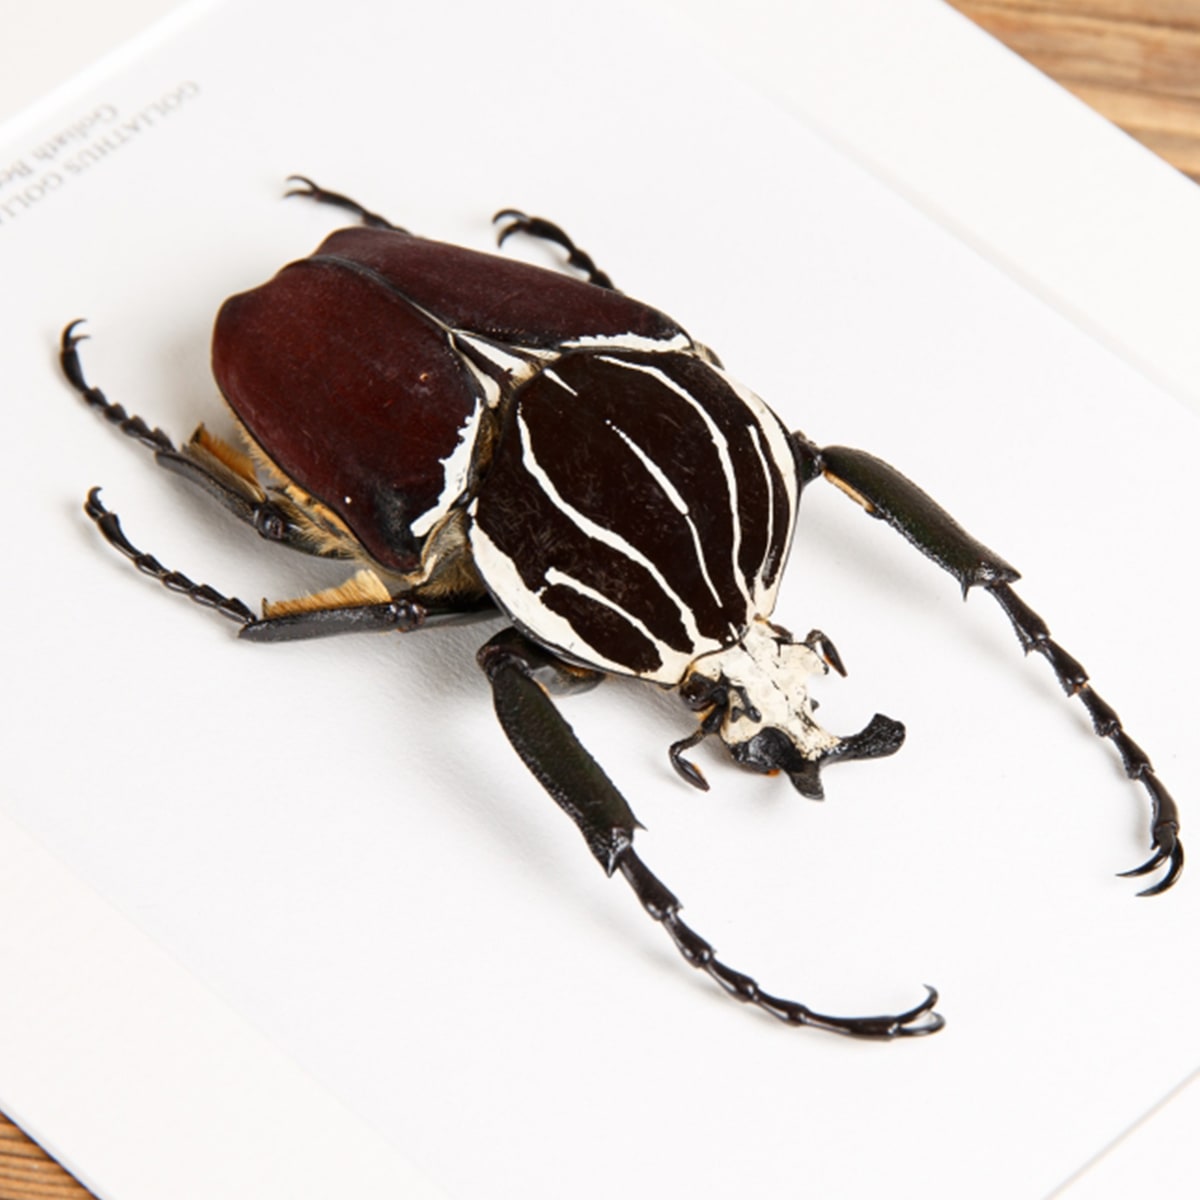 Goliath Beetle in Box Frame (Goliathus goliatus)